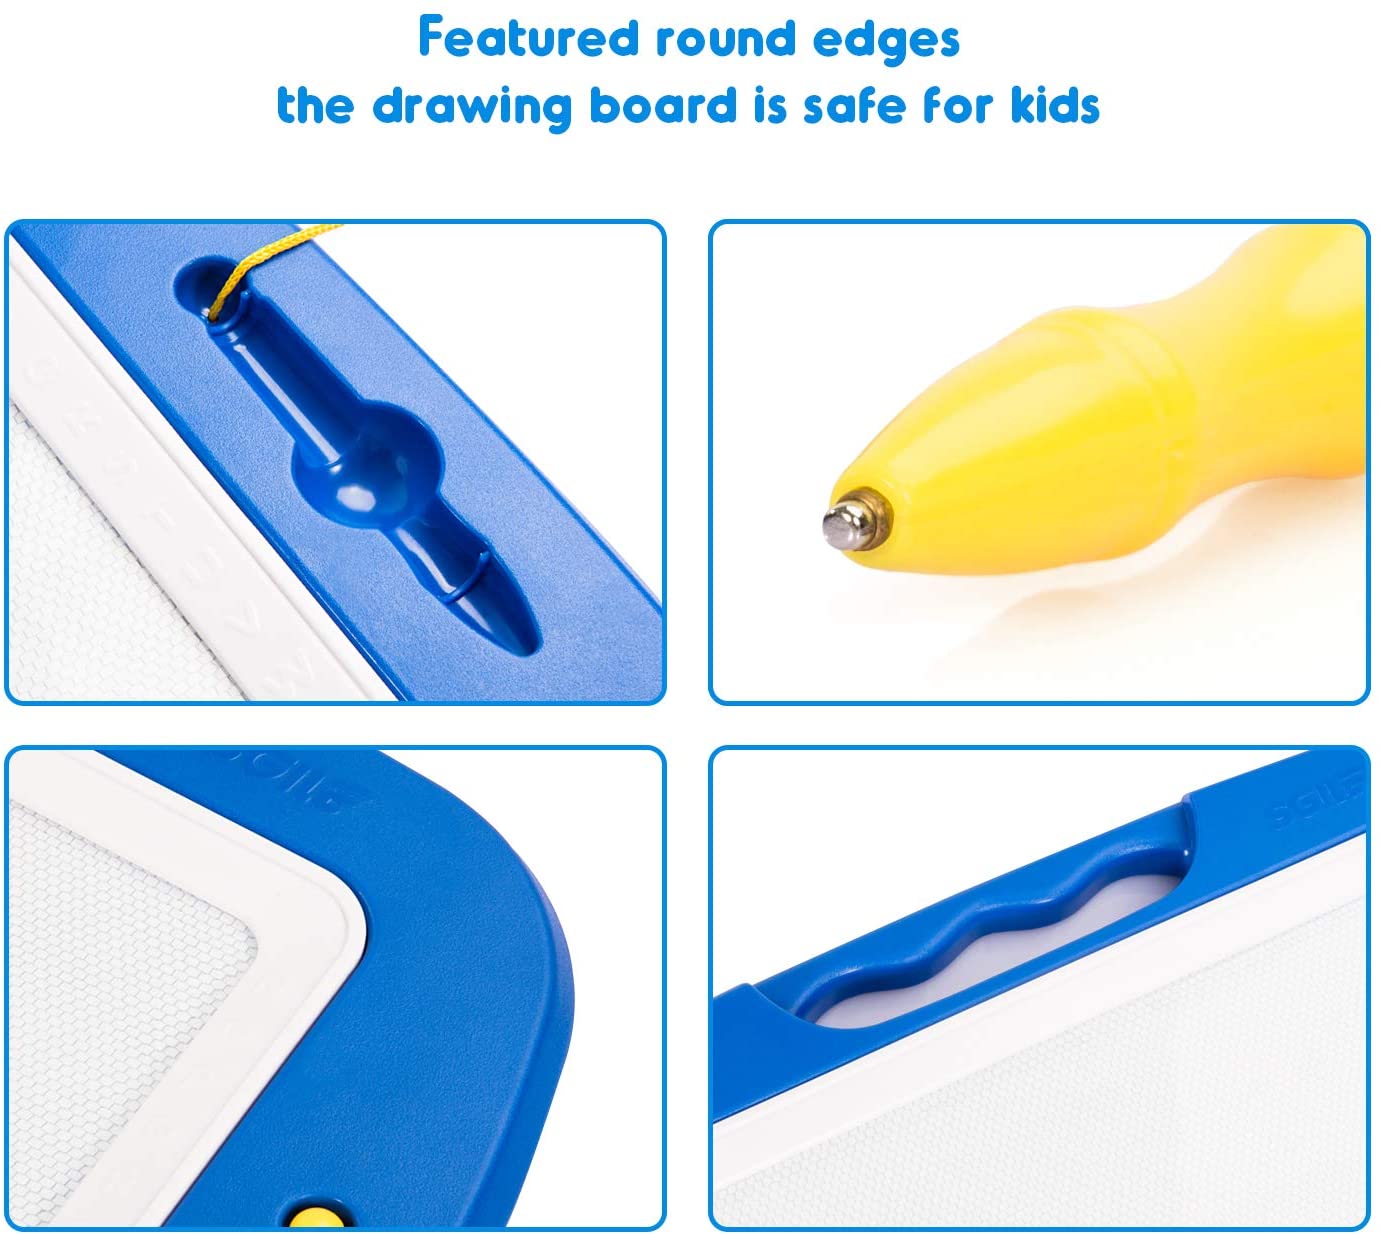 Magic Sketch Pad™ – Smart Kids Fun